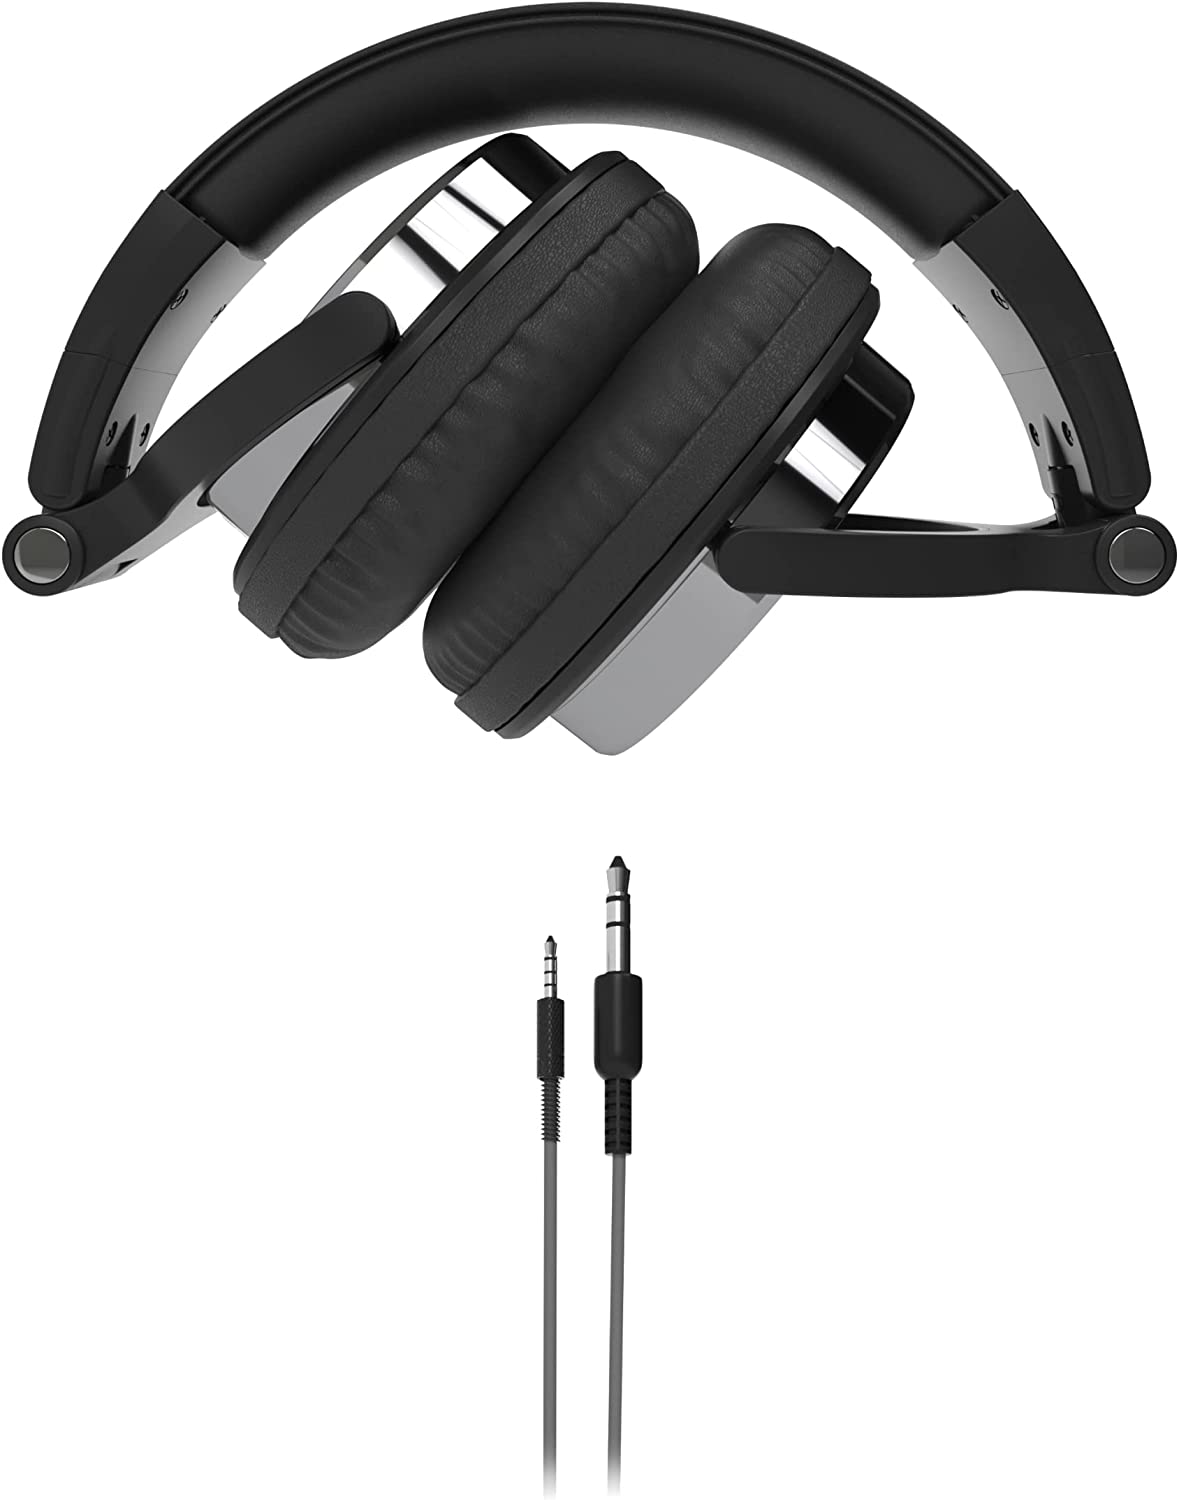 KitSound KSNDJBK Kitsound KSDJ Dj Over-Ear Headphones Compatible with Smartphones, Tablets and MP3 Devices, Black